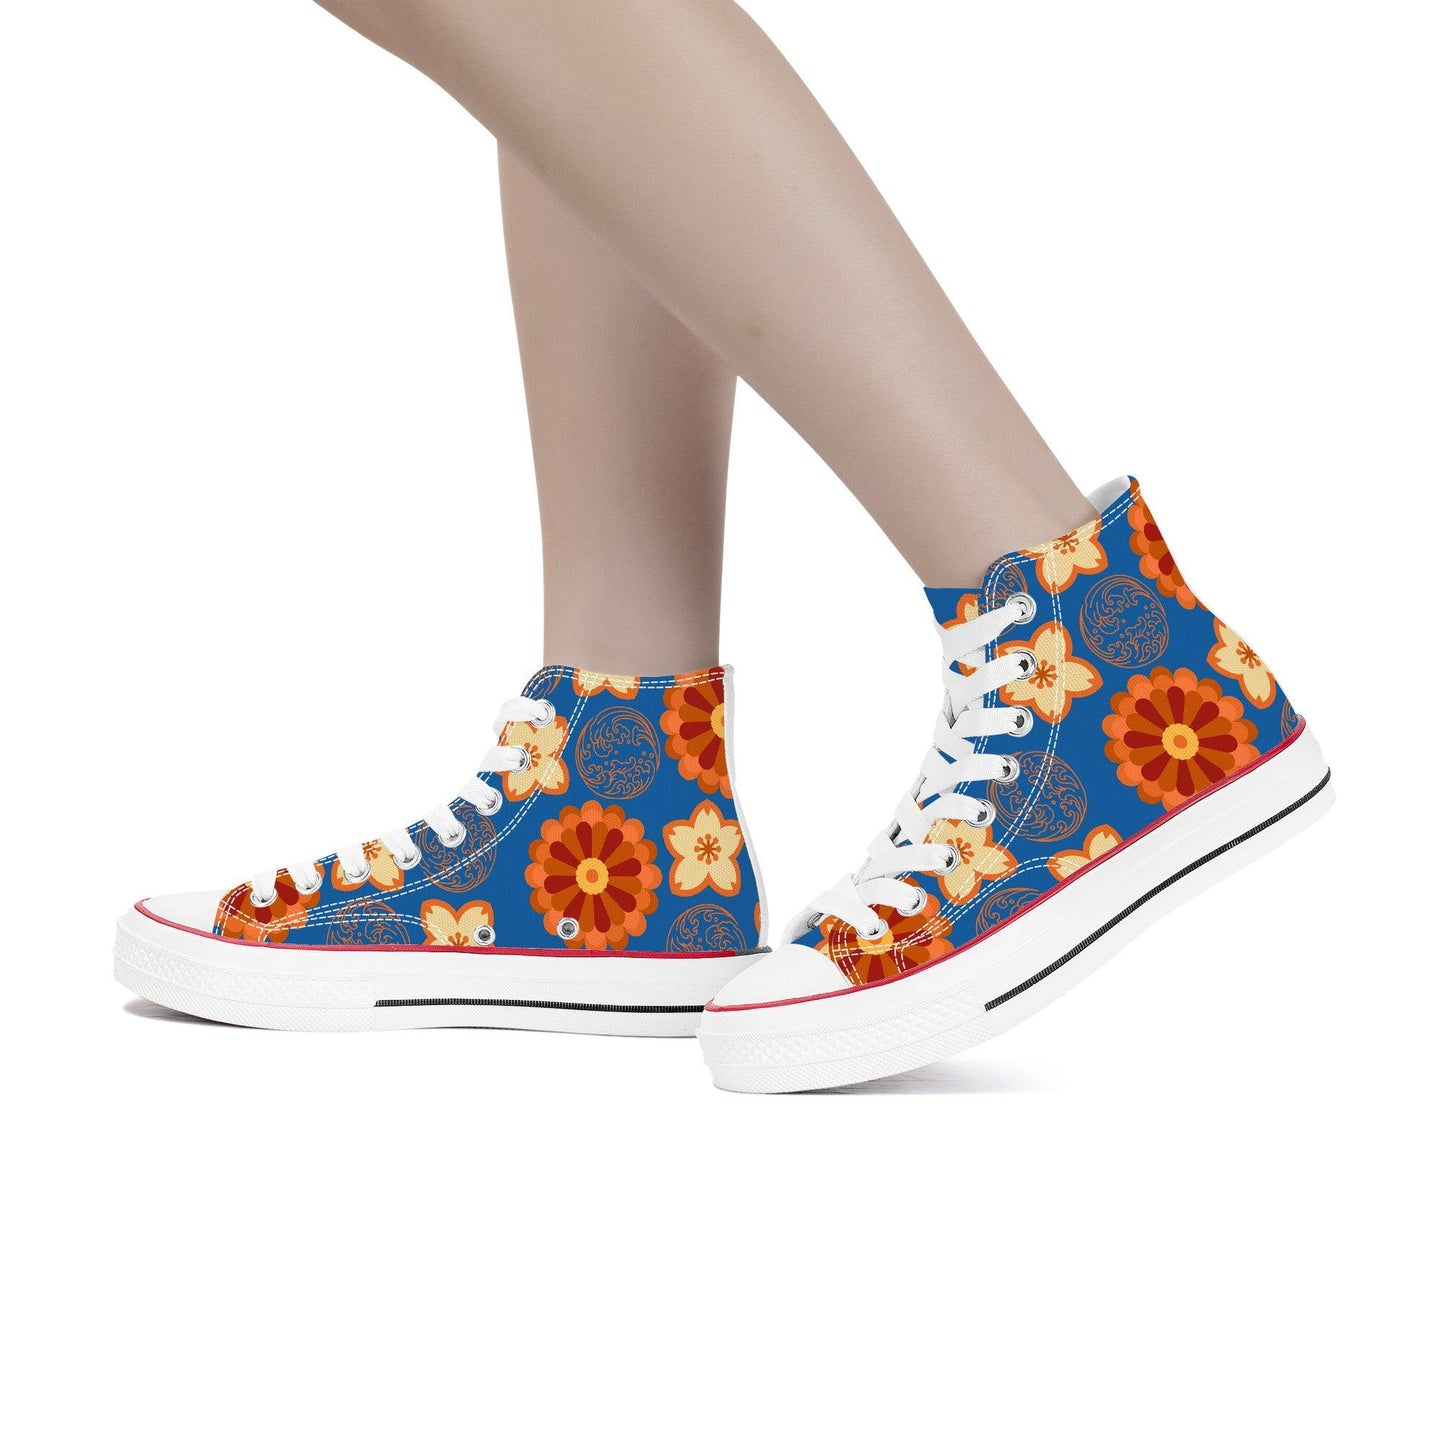 Orange Flowers & Blue Sky - High Top Canvas Shoes - Kaito Japan Design 